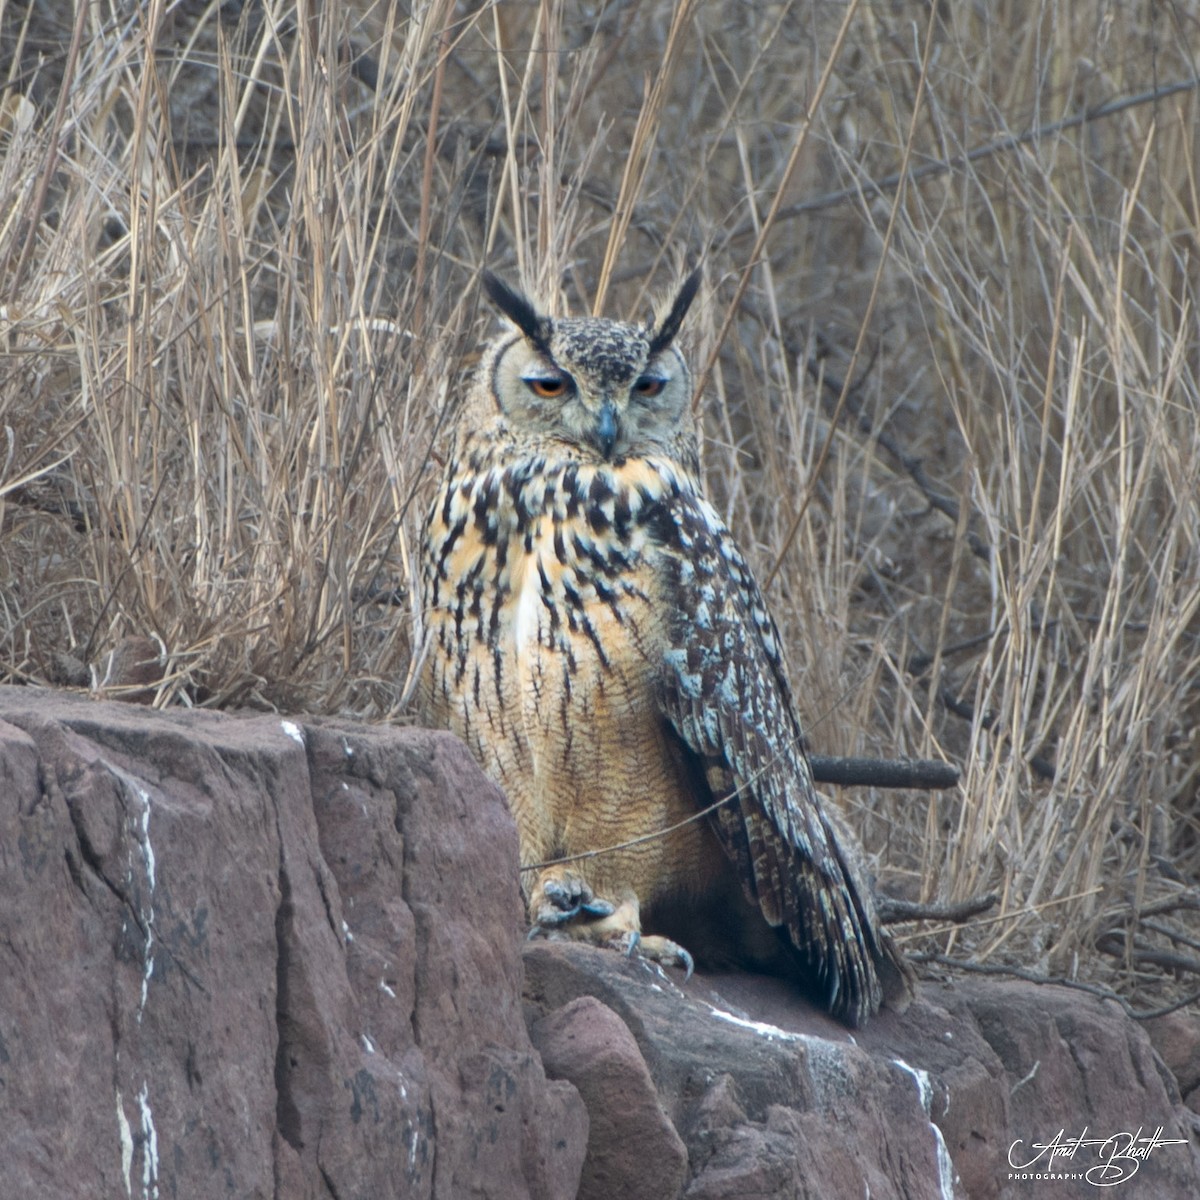 Rock Eagle-Owl - amit bhatt